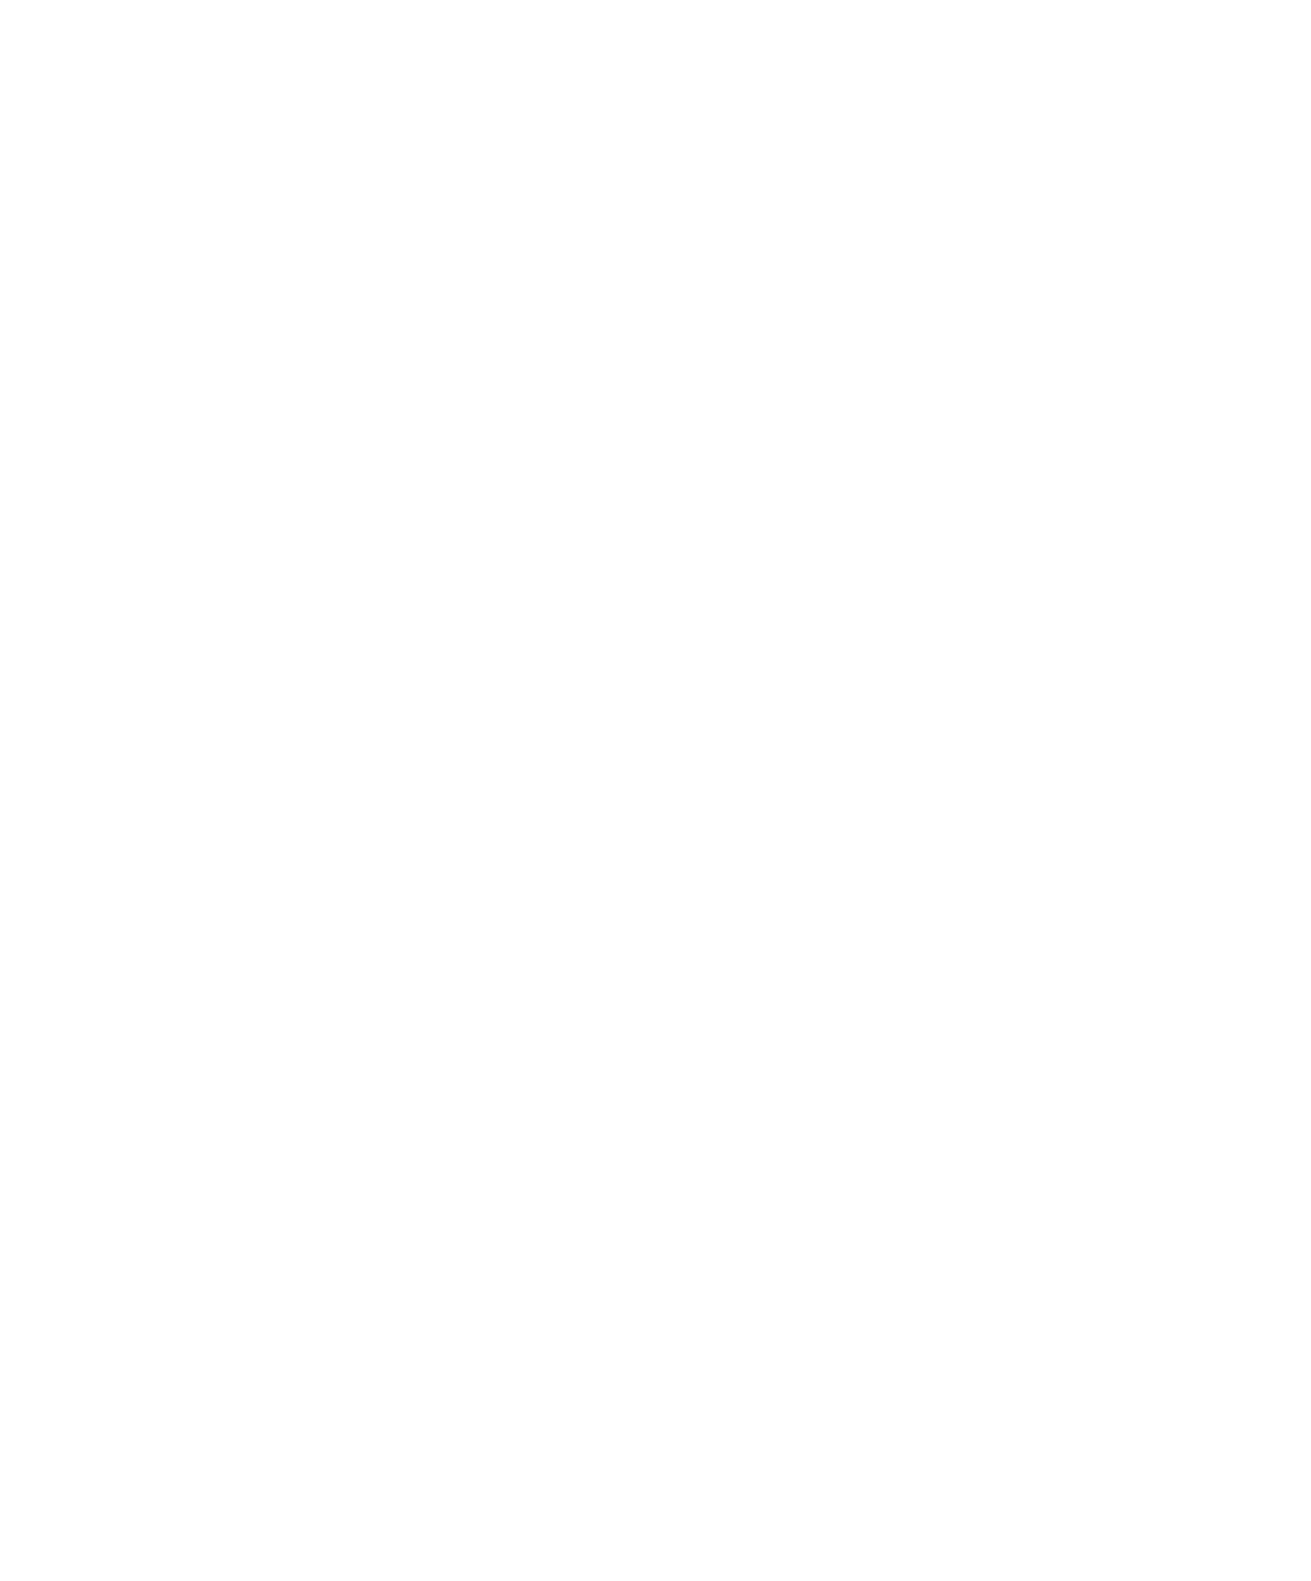 Aamal Company logo large for dark backgrounds (transparent PNG)